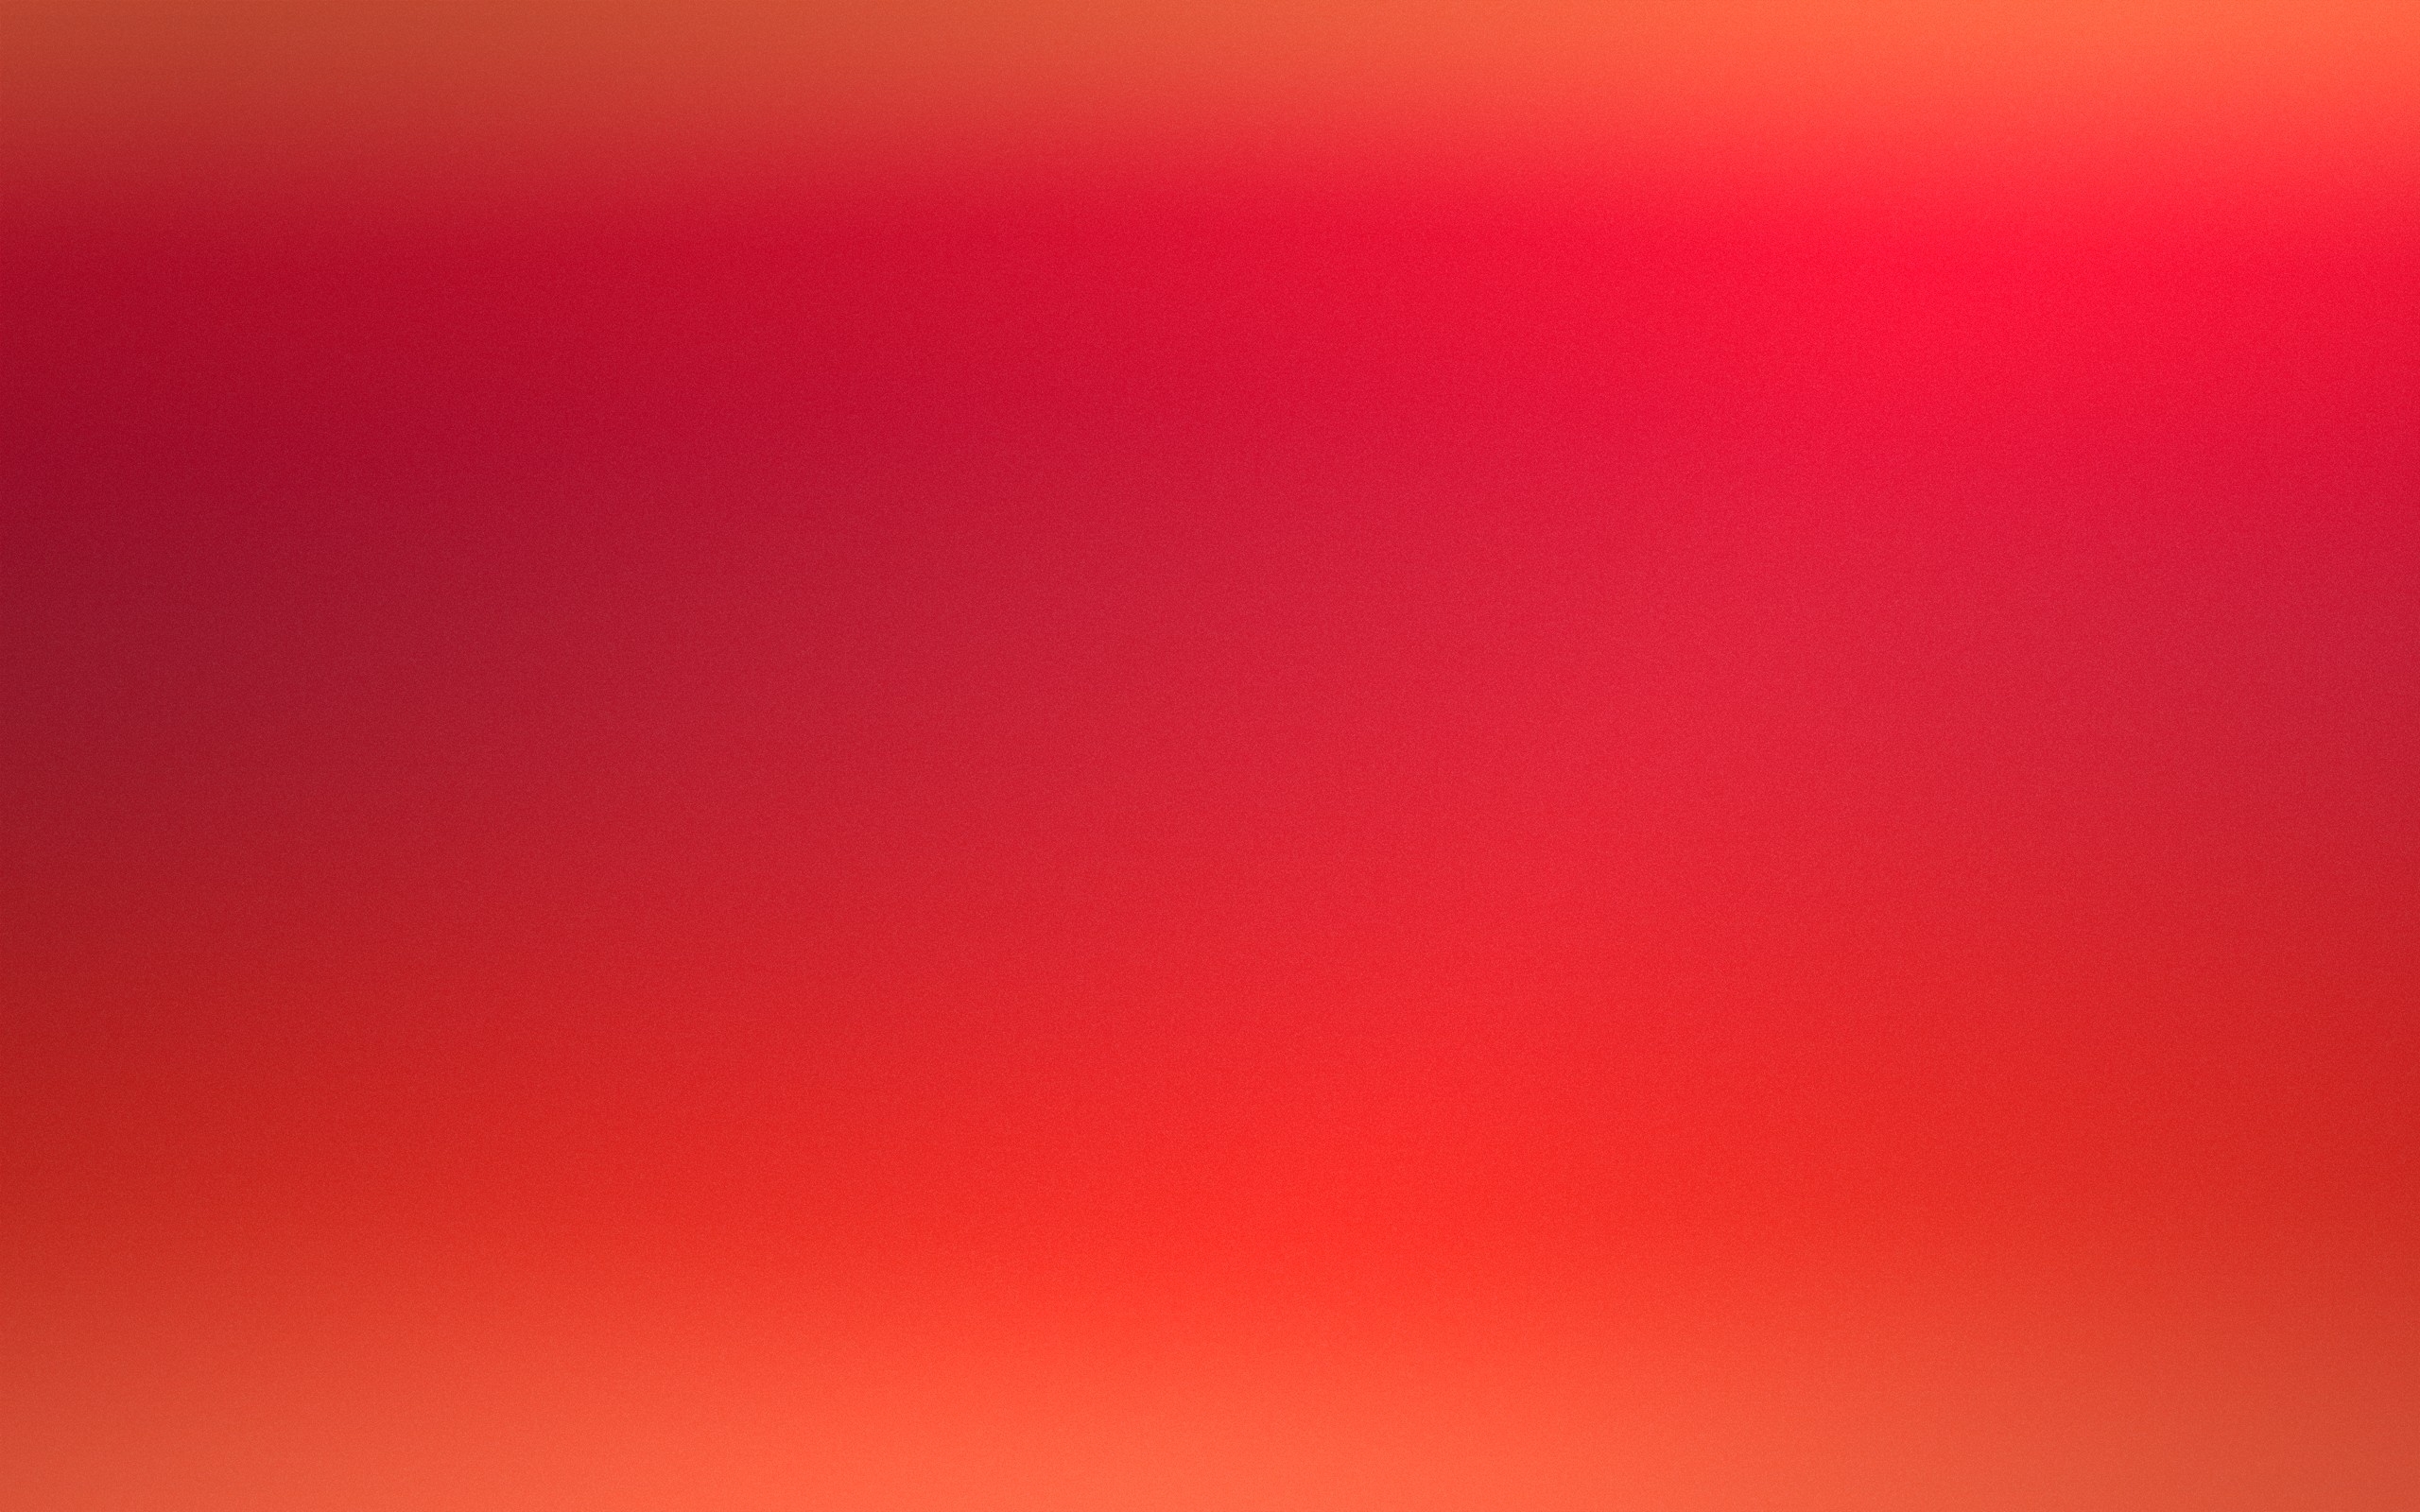 Minimalistic Red Orange Cherries Gradient Background Colors